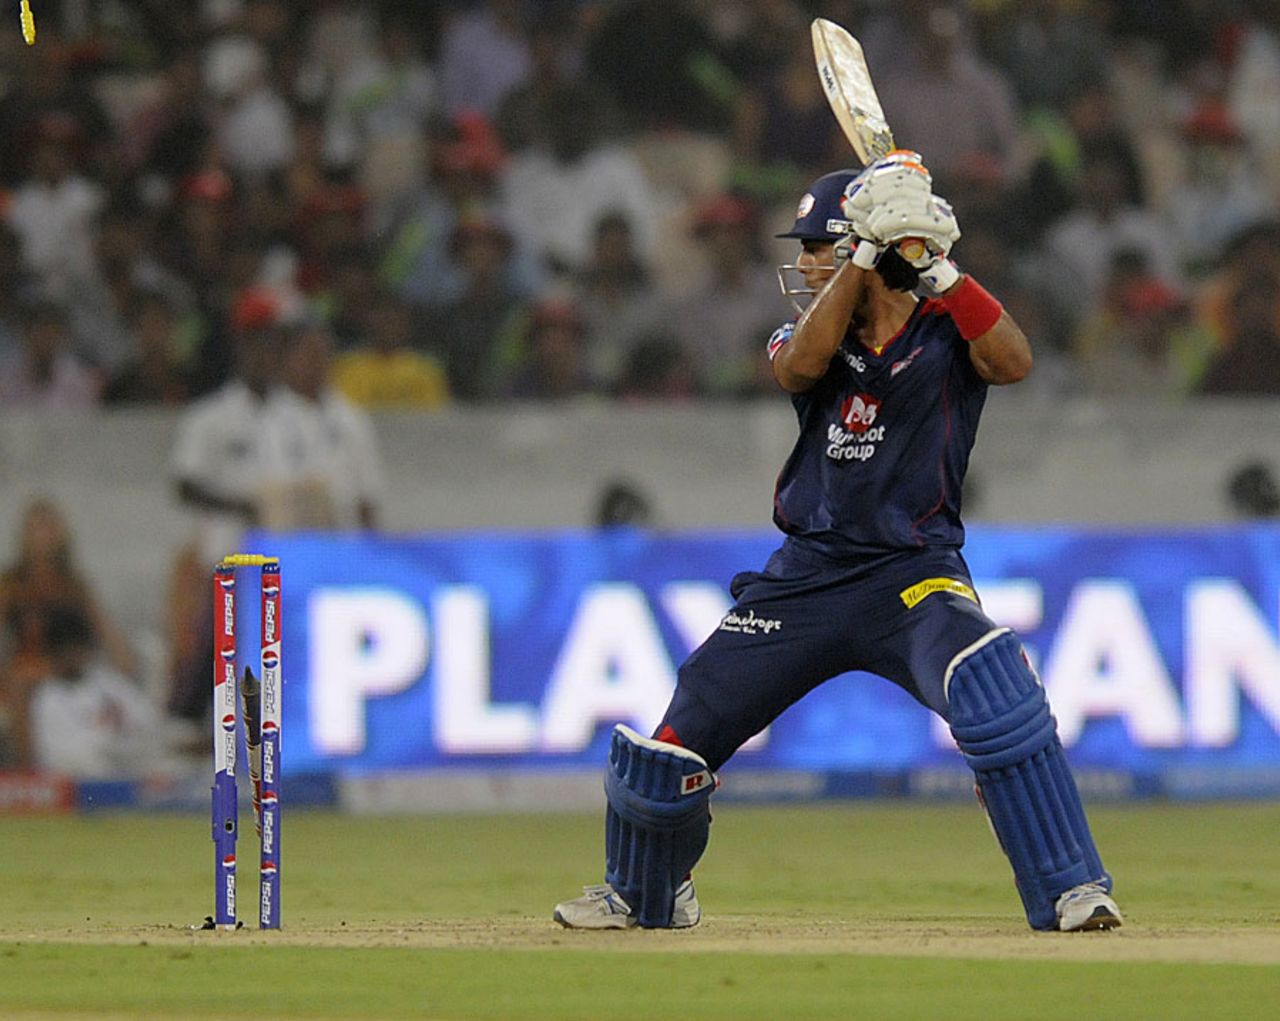 Unmukt Chand makes room and loses his leg stump to Dale Steyn, Sunrisers Hyderabad v Delhi Daredevils, IPL, Hyderabad, May 4, 2013